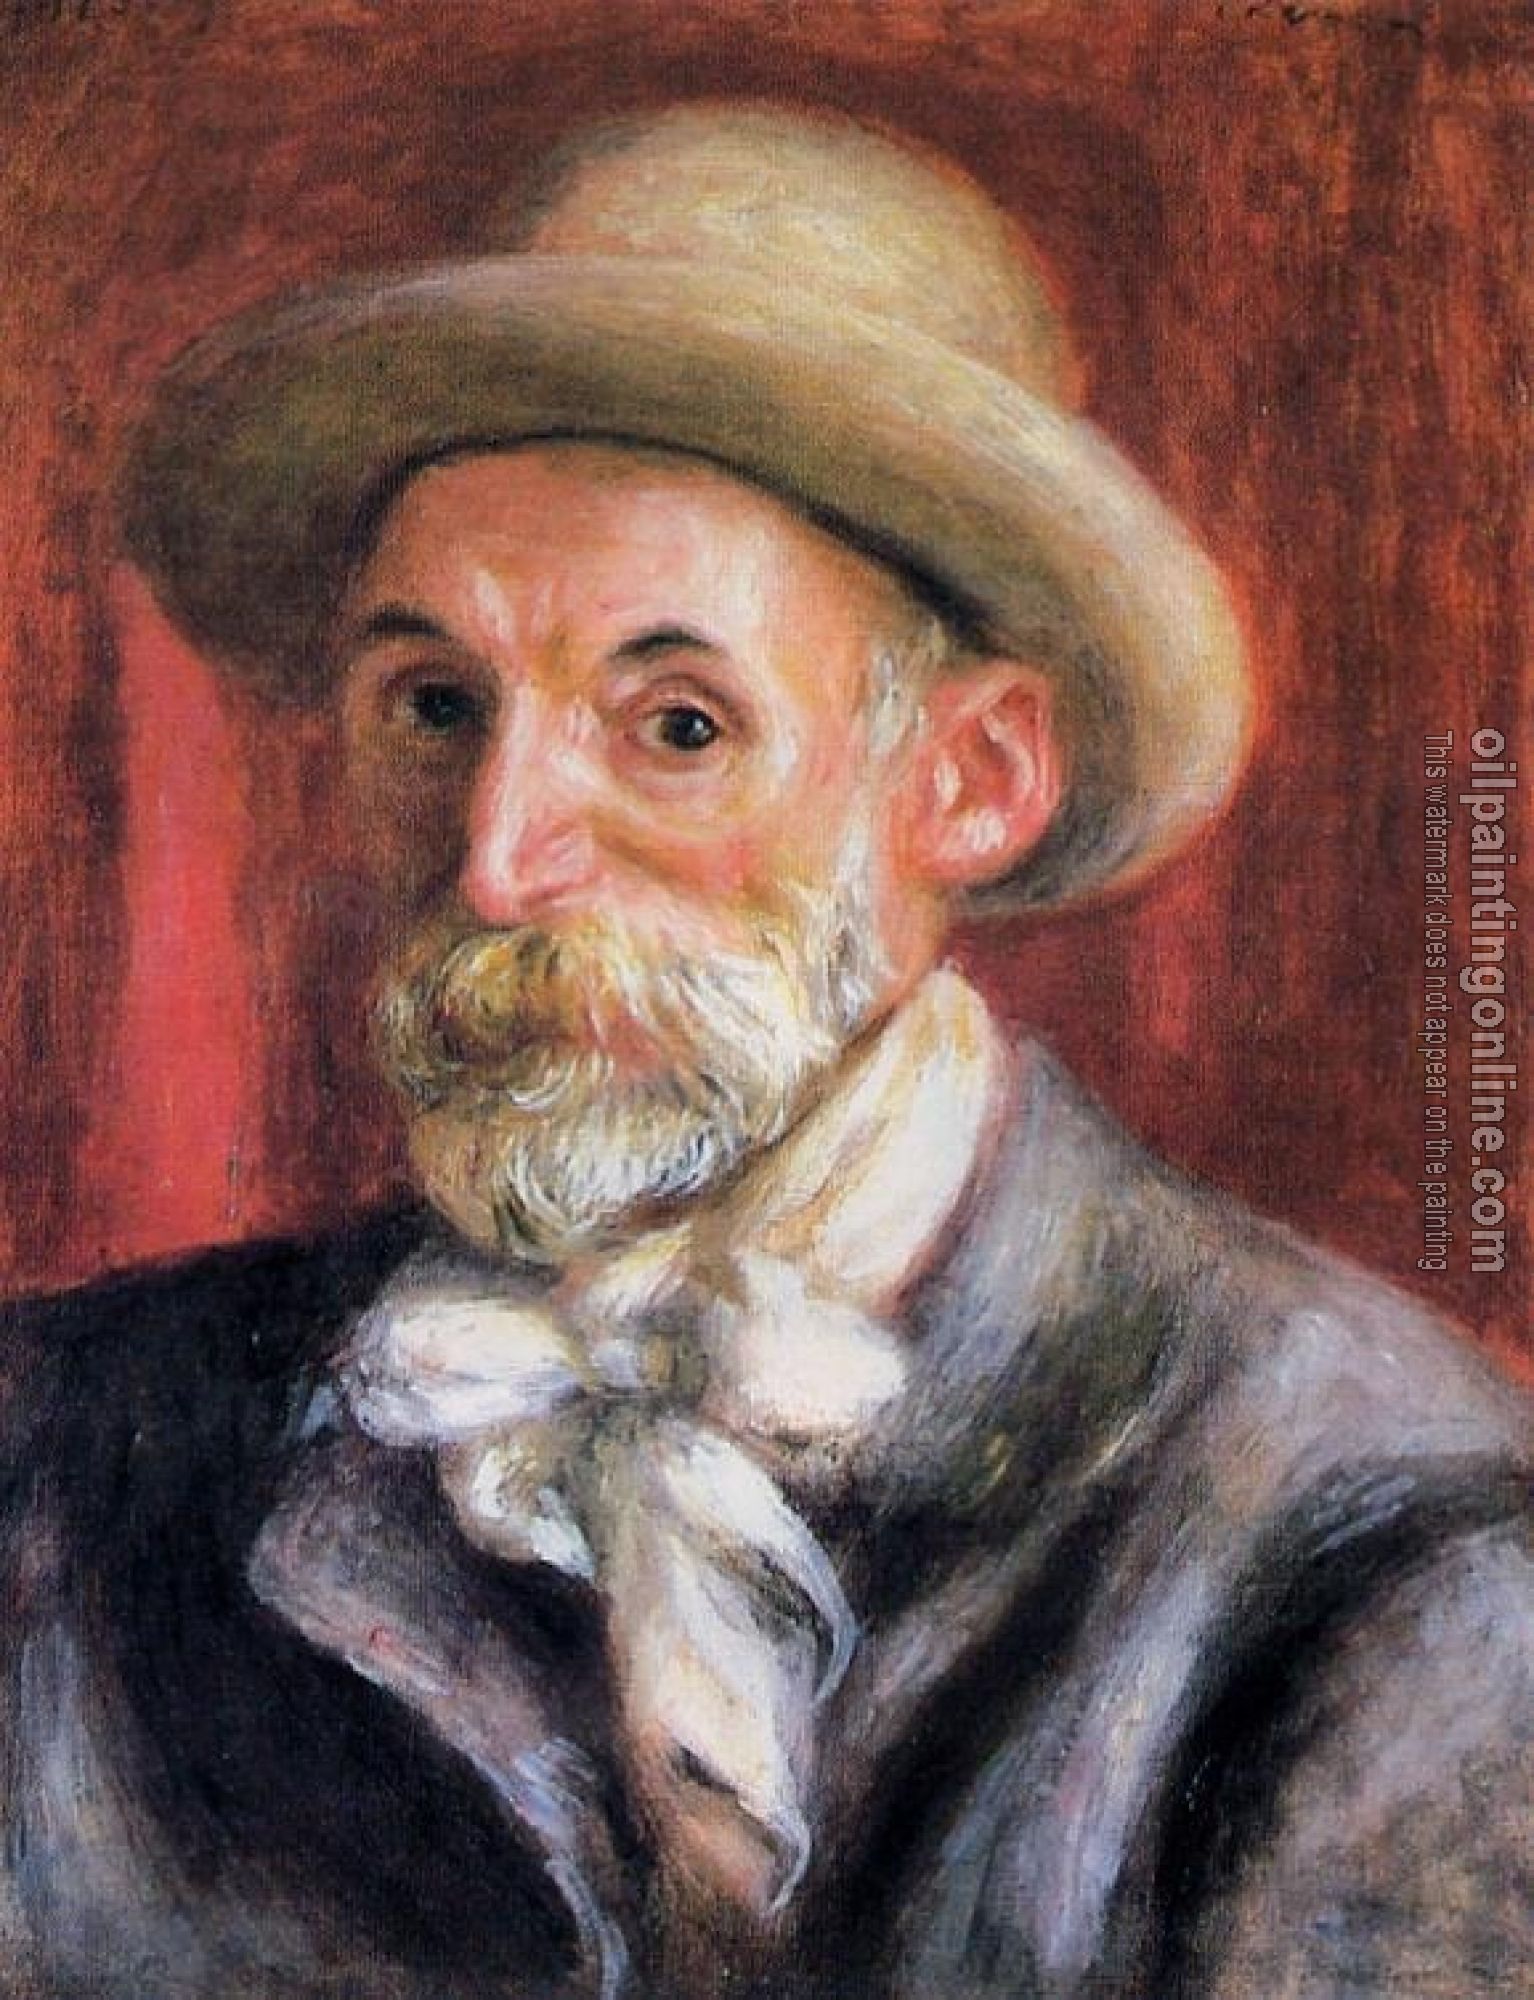 Renoir, Pierre Auguste - Self Portrait